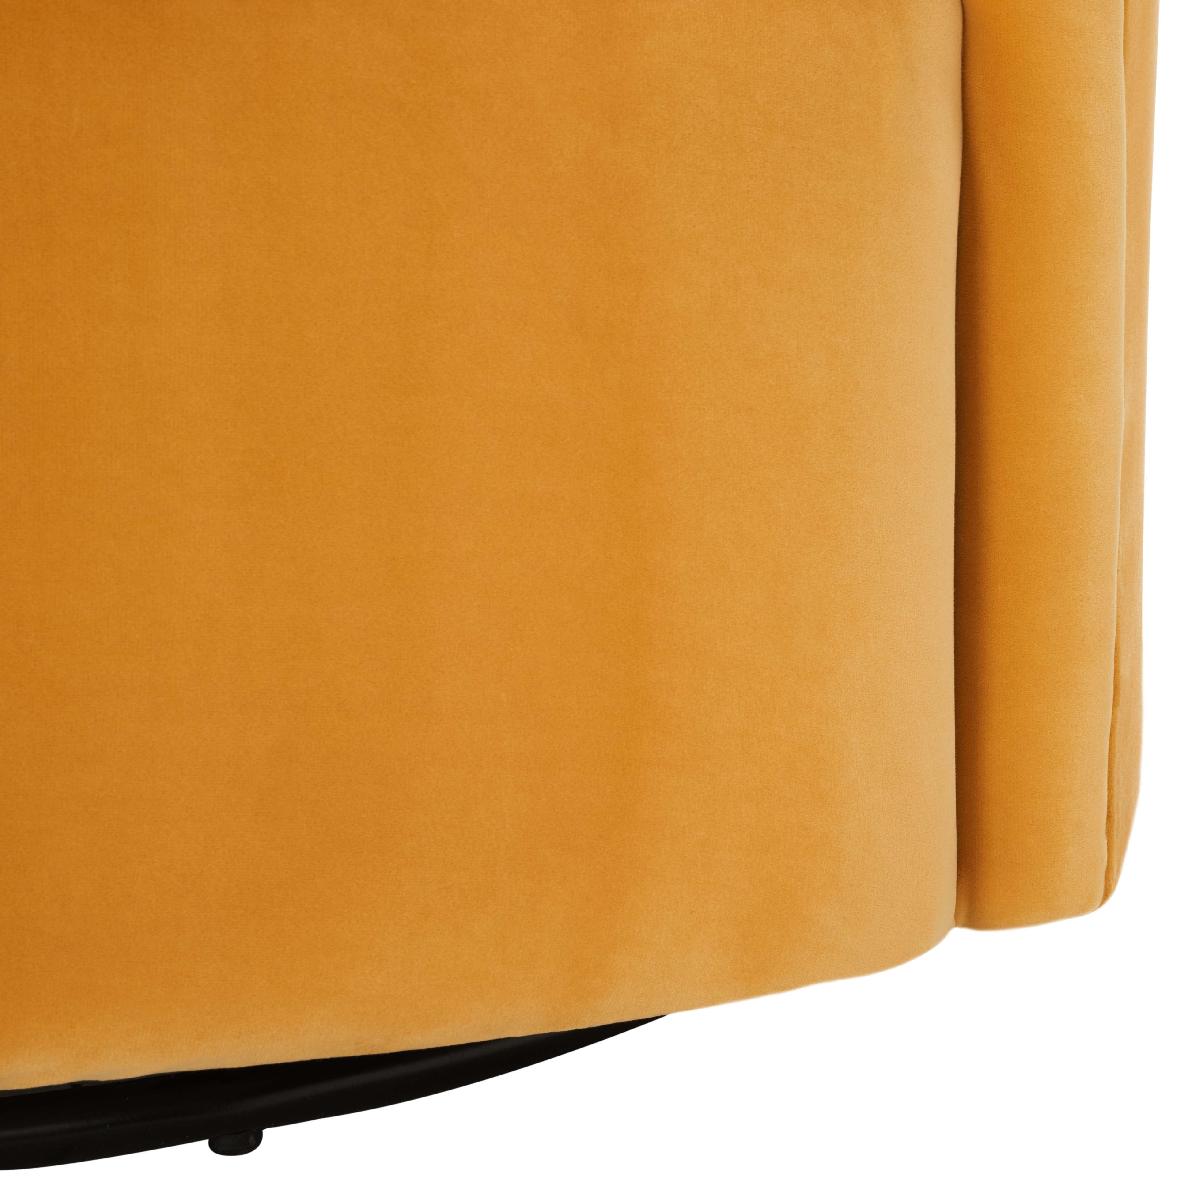 Safavieh Couture Lesley Swivel Barrel Chair - Mustard